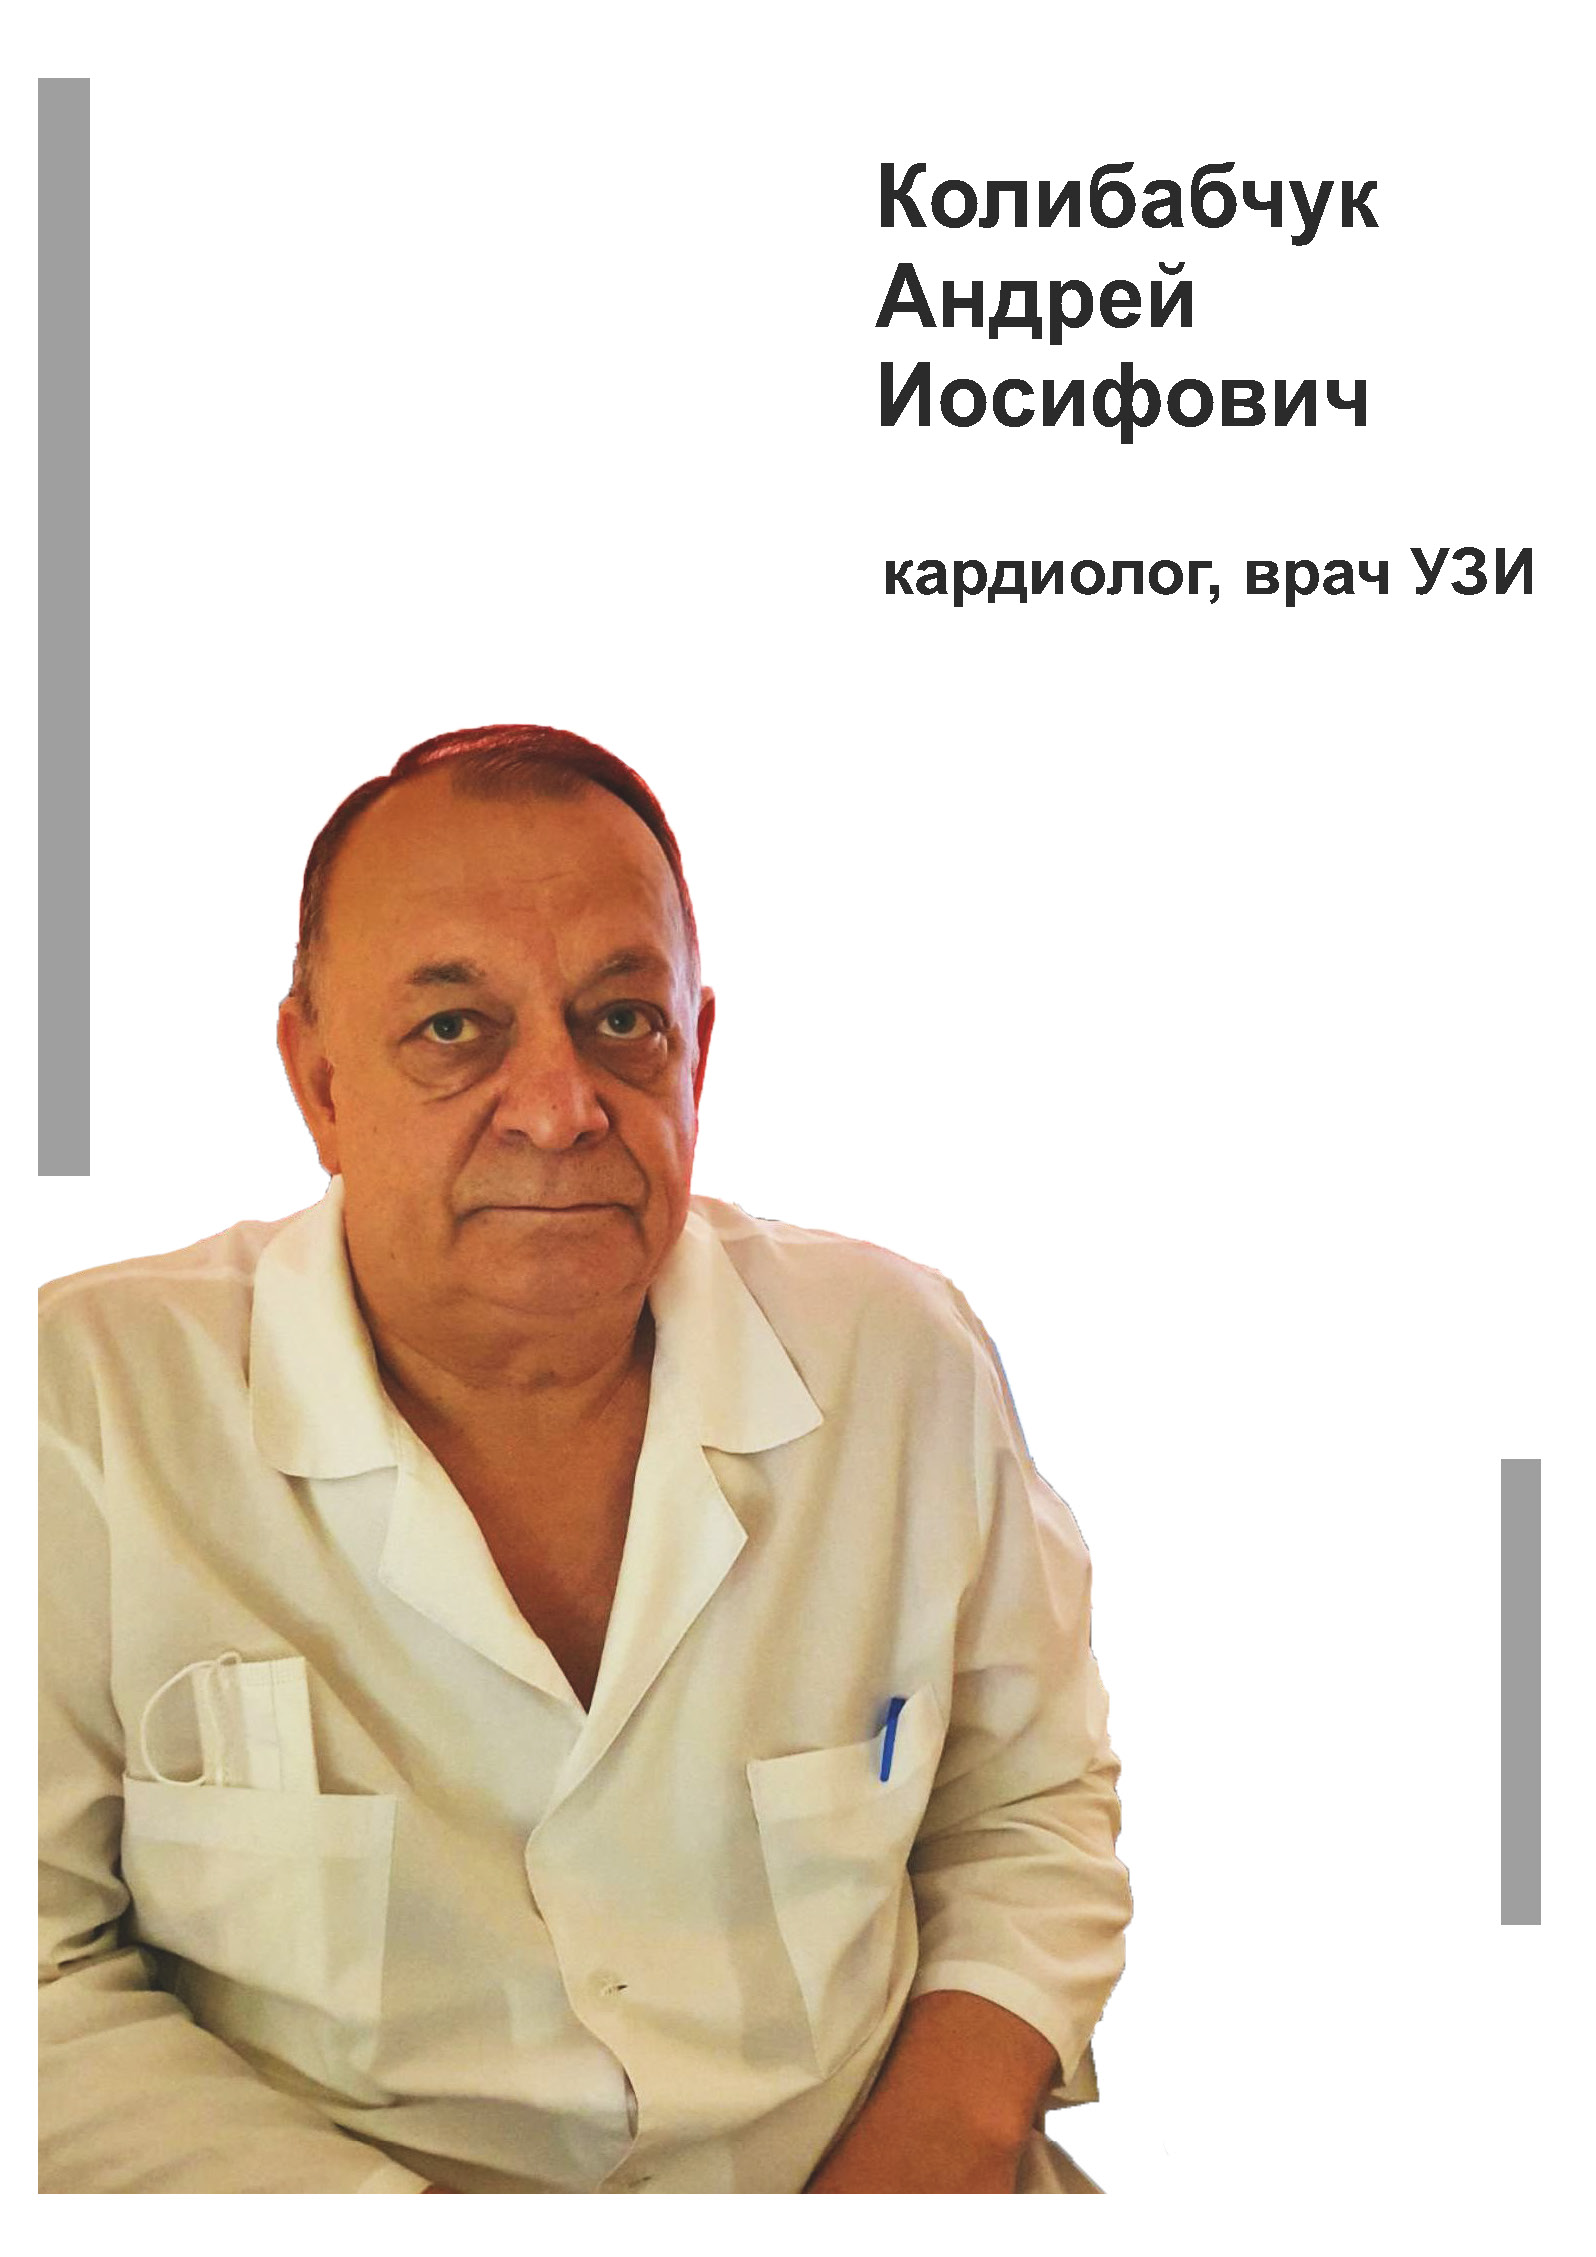 Колибабчук Андрей Иосифович - кардиолог, врач УЗИ в клинике Lezaffe г. Югорск